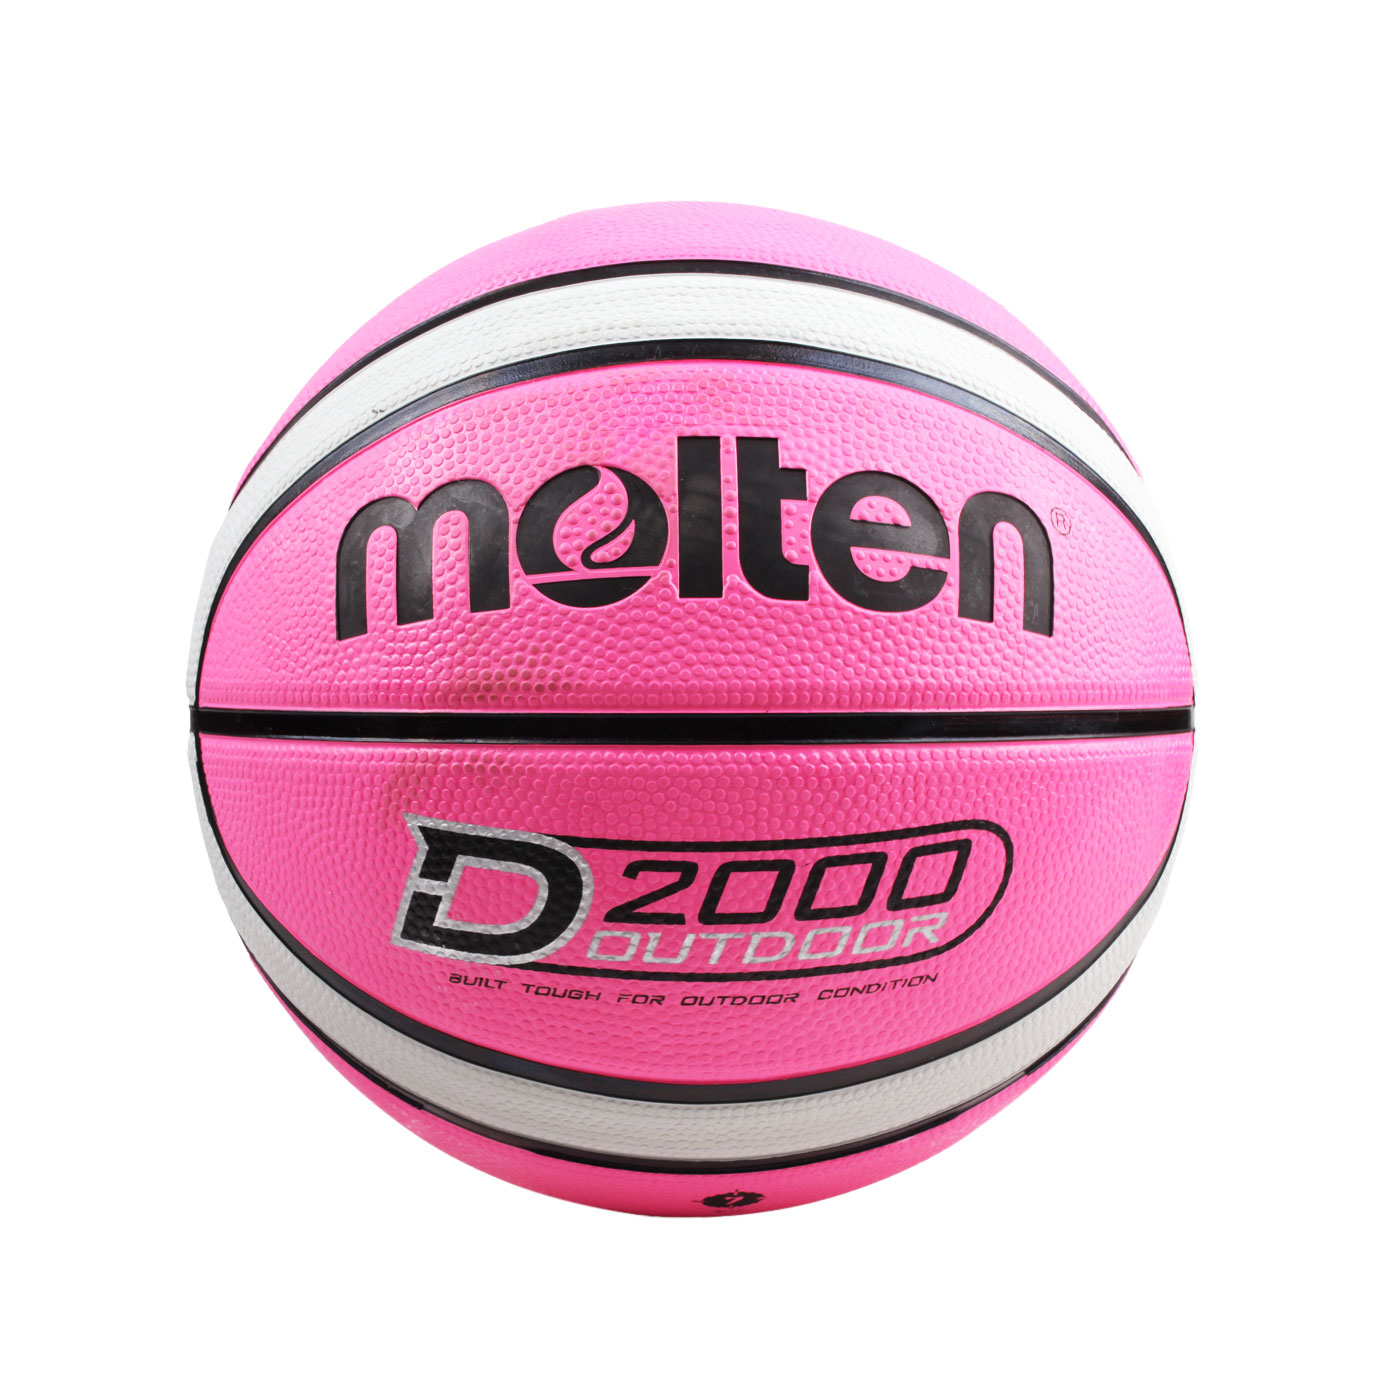 Molten 12片橡膠深溝籃球 B7D2005-BH - 粉紅灰